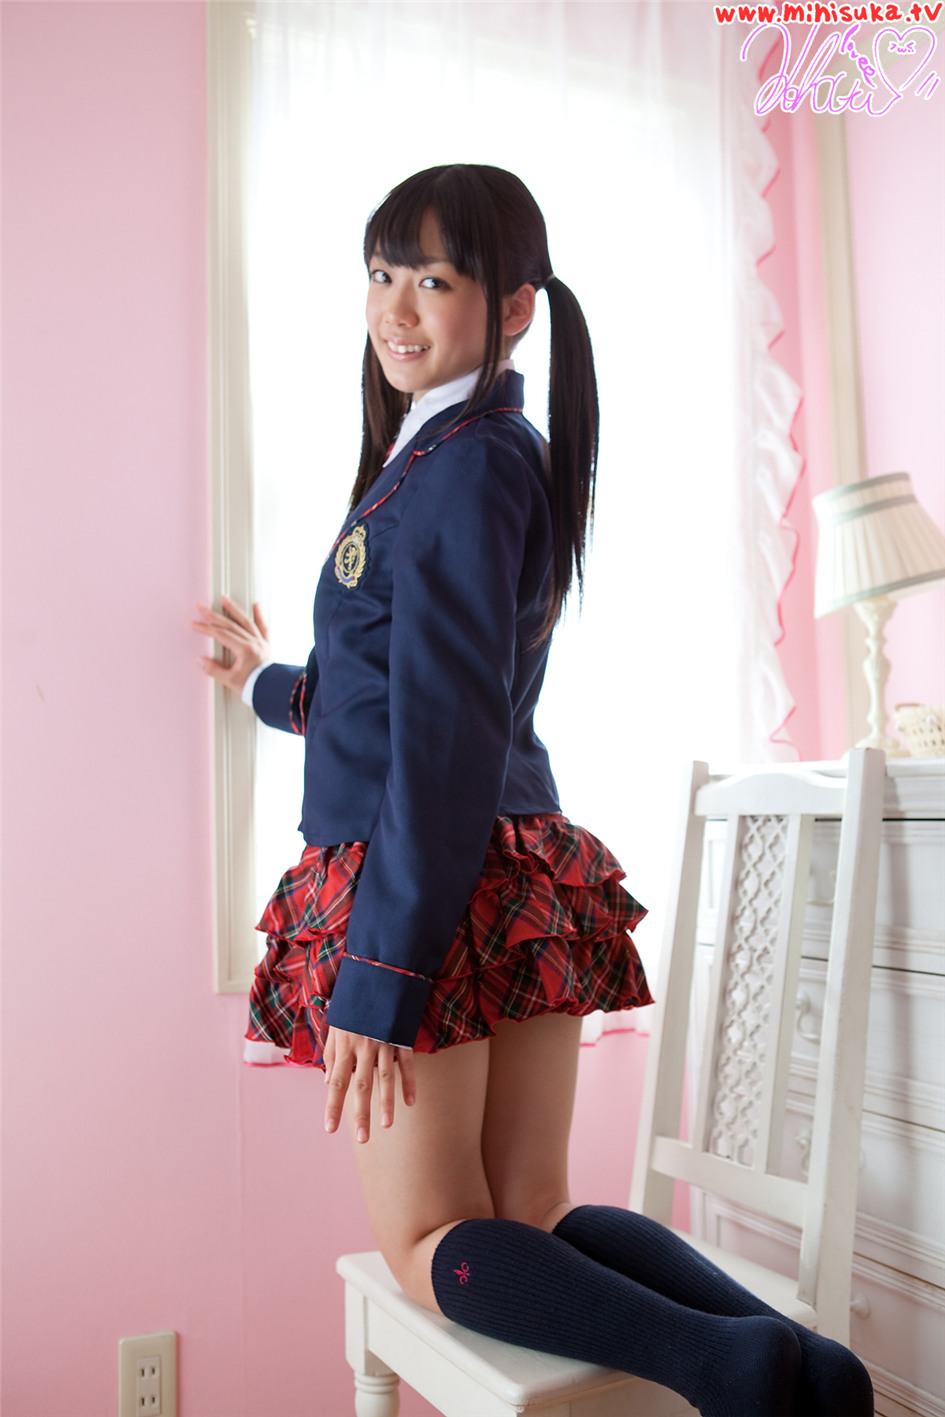 [Minisuka.tv]日本写真偶像西野小春学生制服写真NO.025第5张